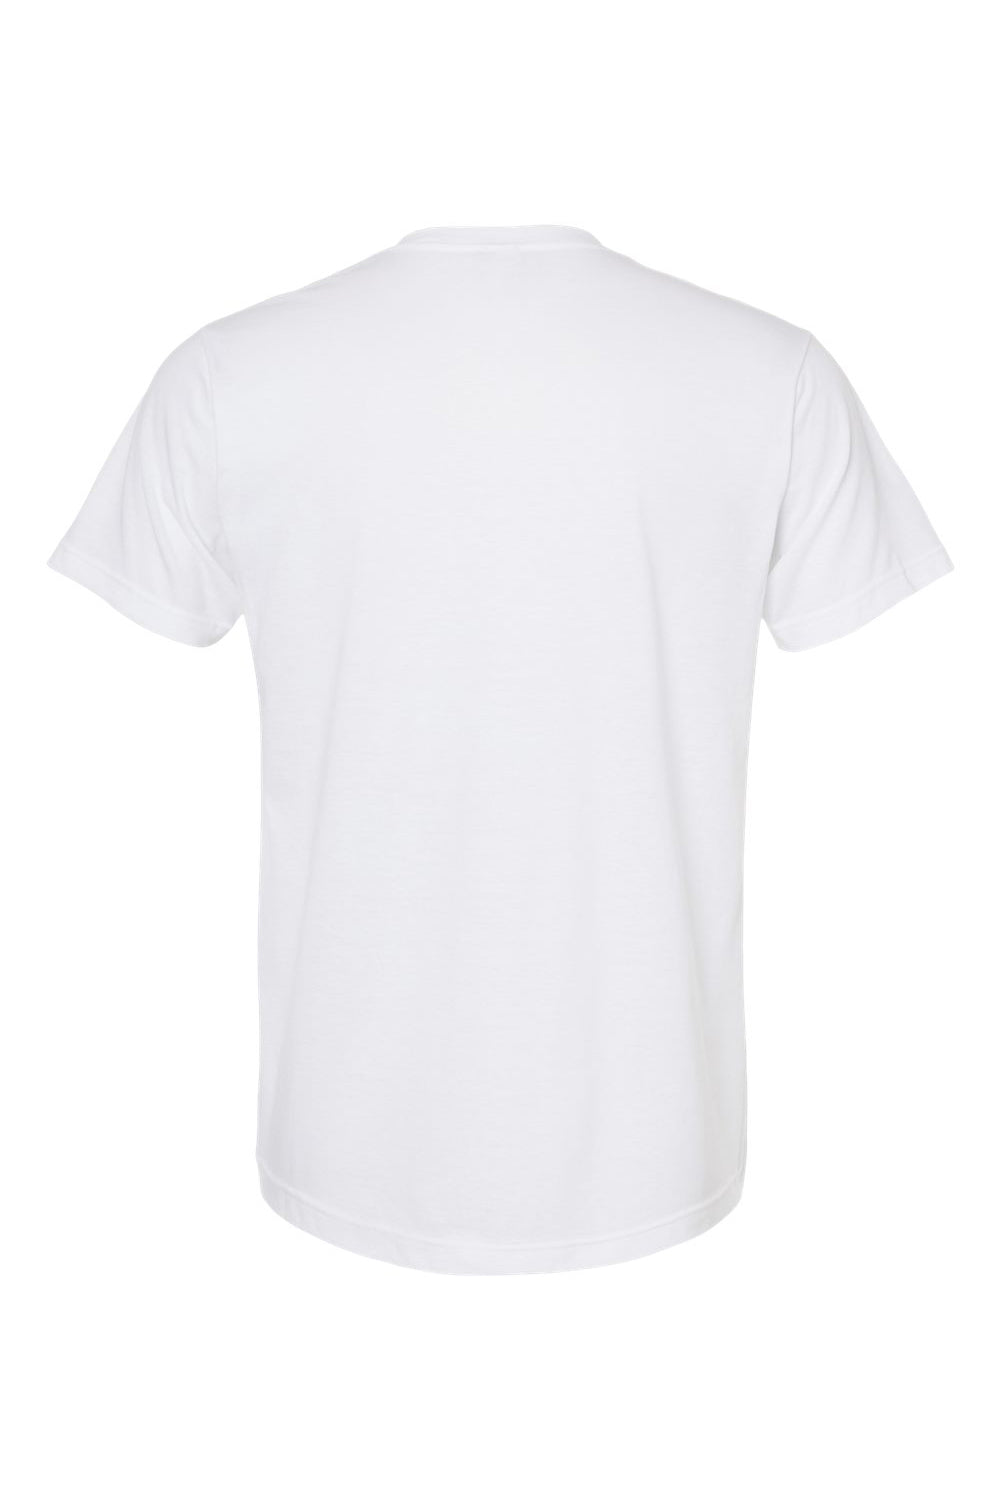 Tultex 207 Mens Poly-Rich Short Sleeve V-Neck T-Shirt White Flat Back